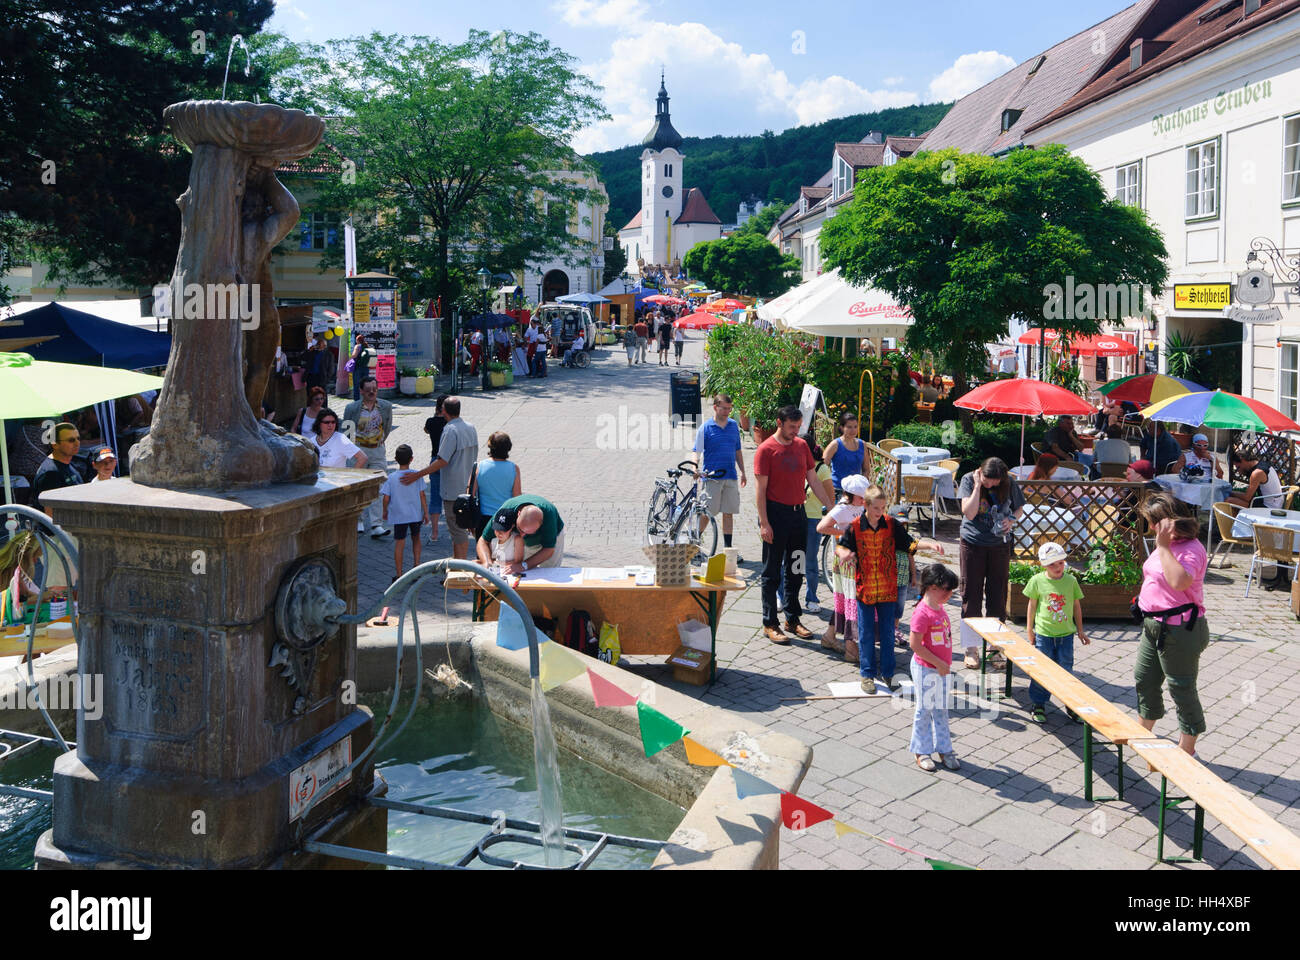 Purkersdorf: Public festival on the main square with parish church Saint Jakob, Wienerwald, Vienna Woods, Niederösterreich, Lower Austria, Austria Stock Photo